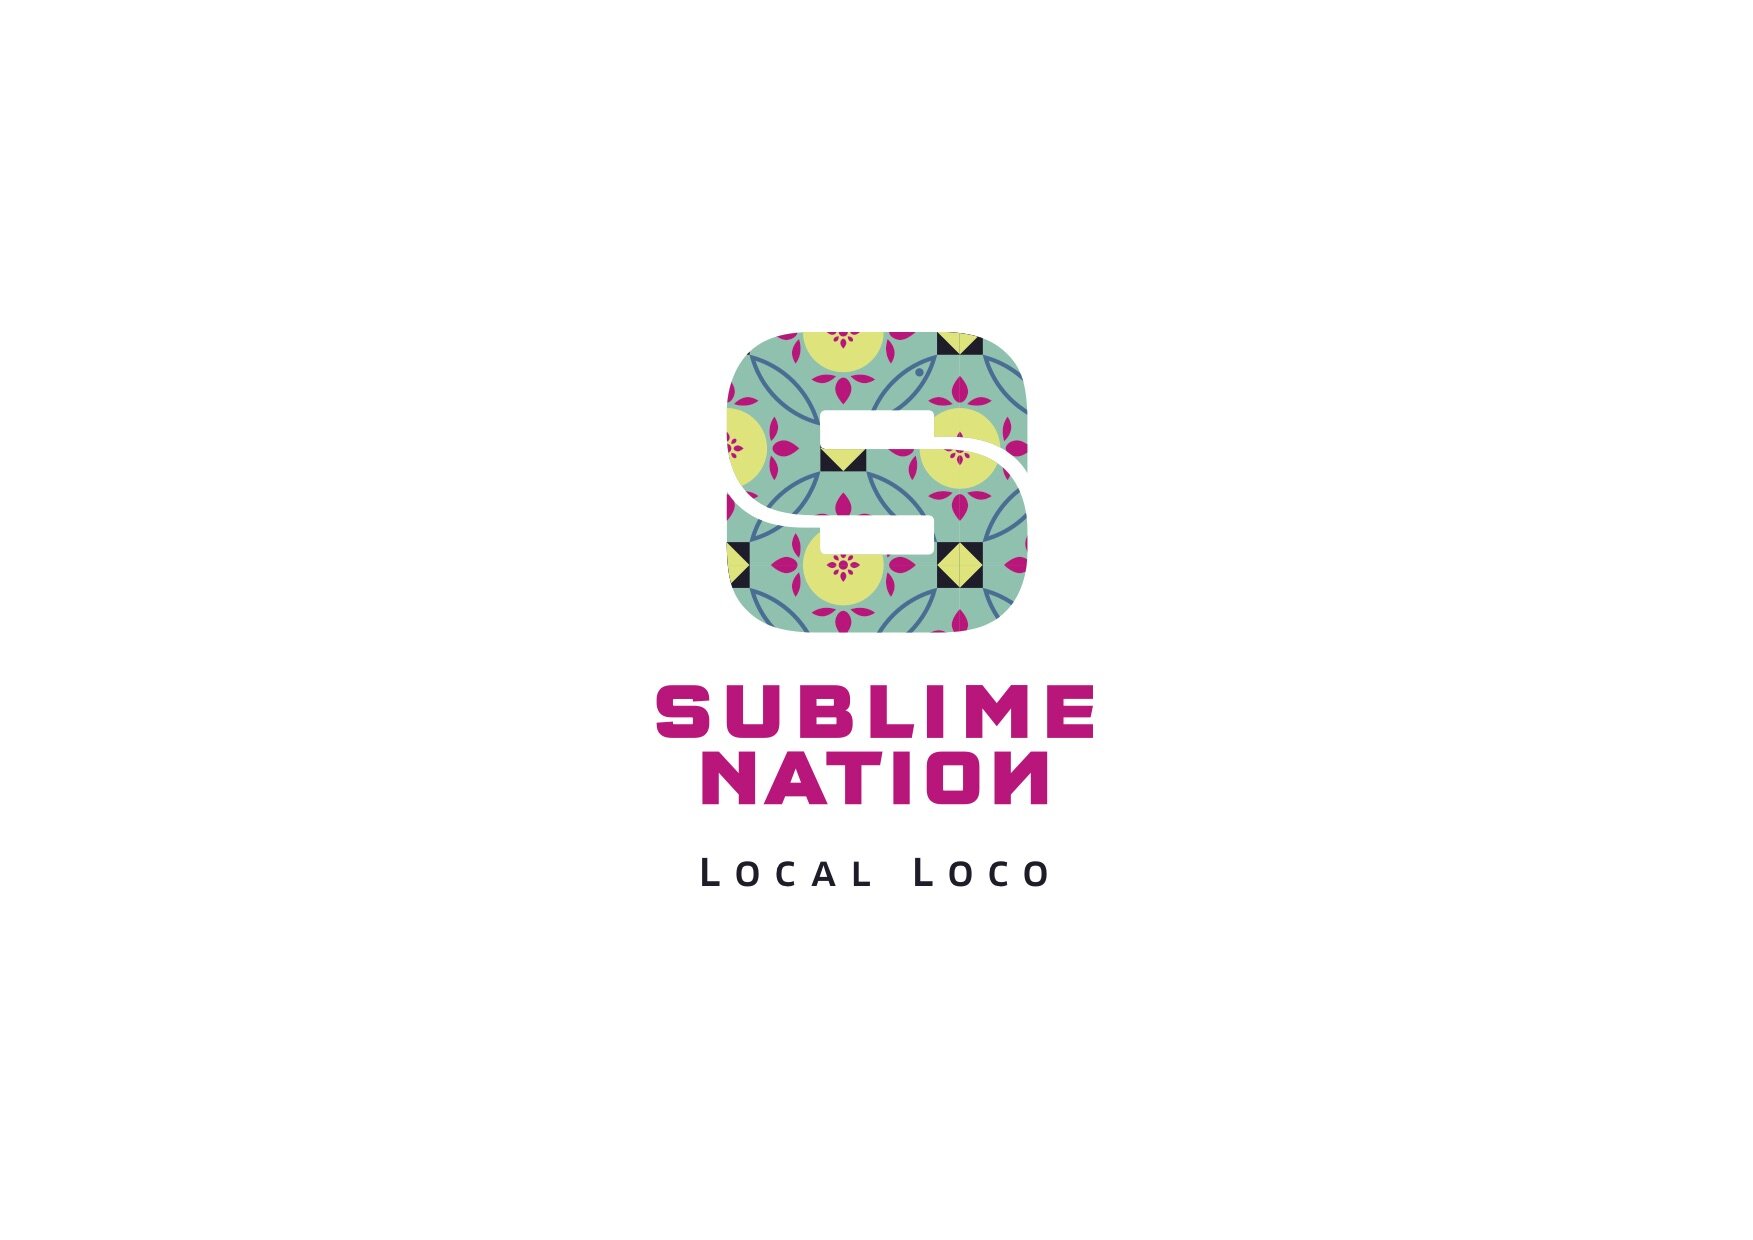 SN_Local Loco white logo .jpg